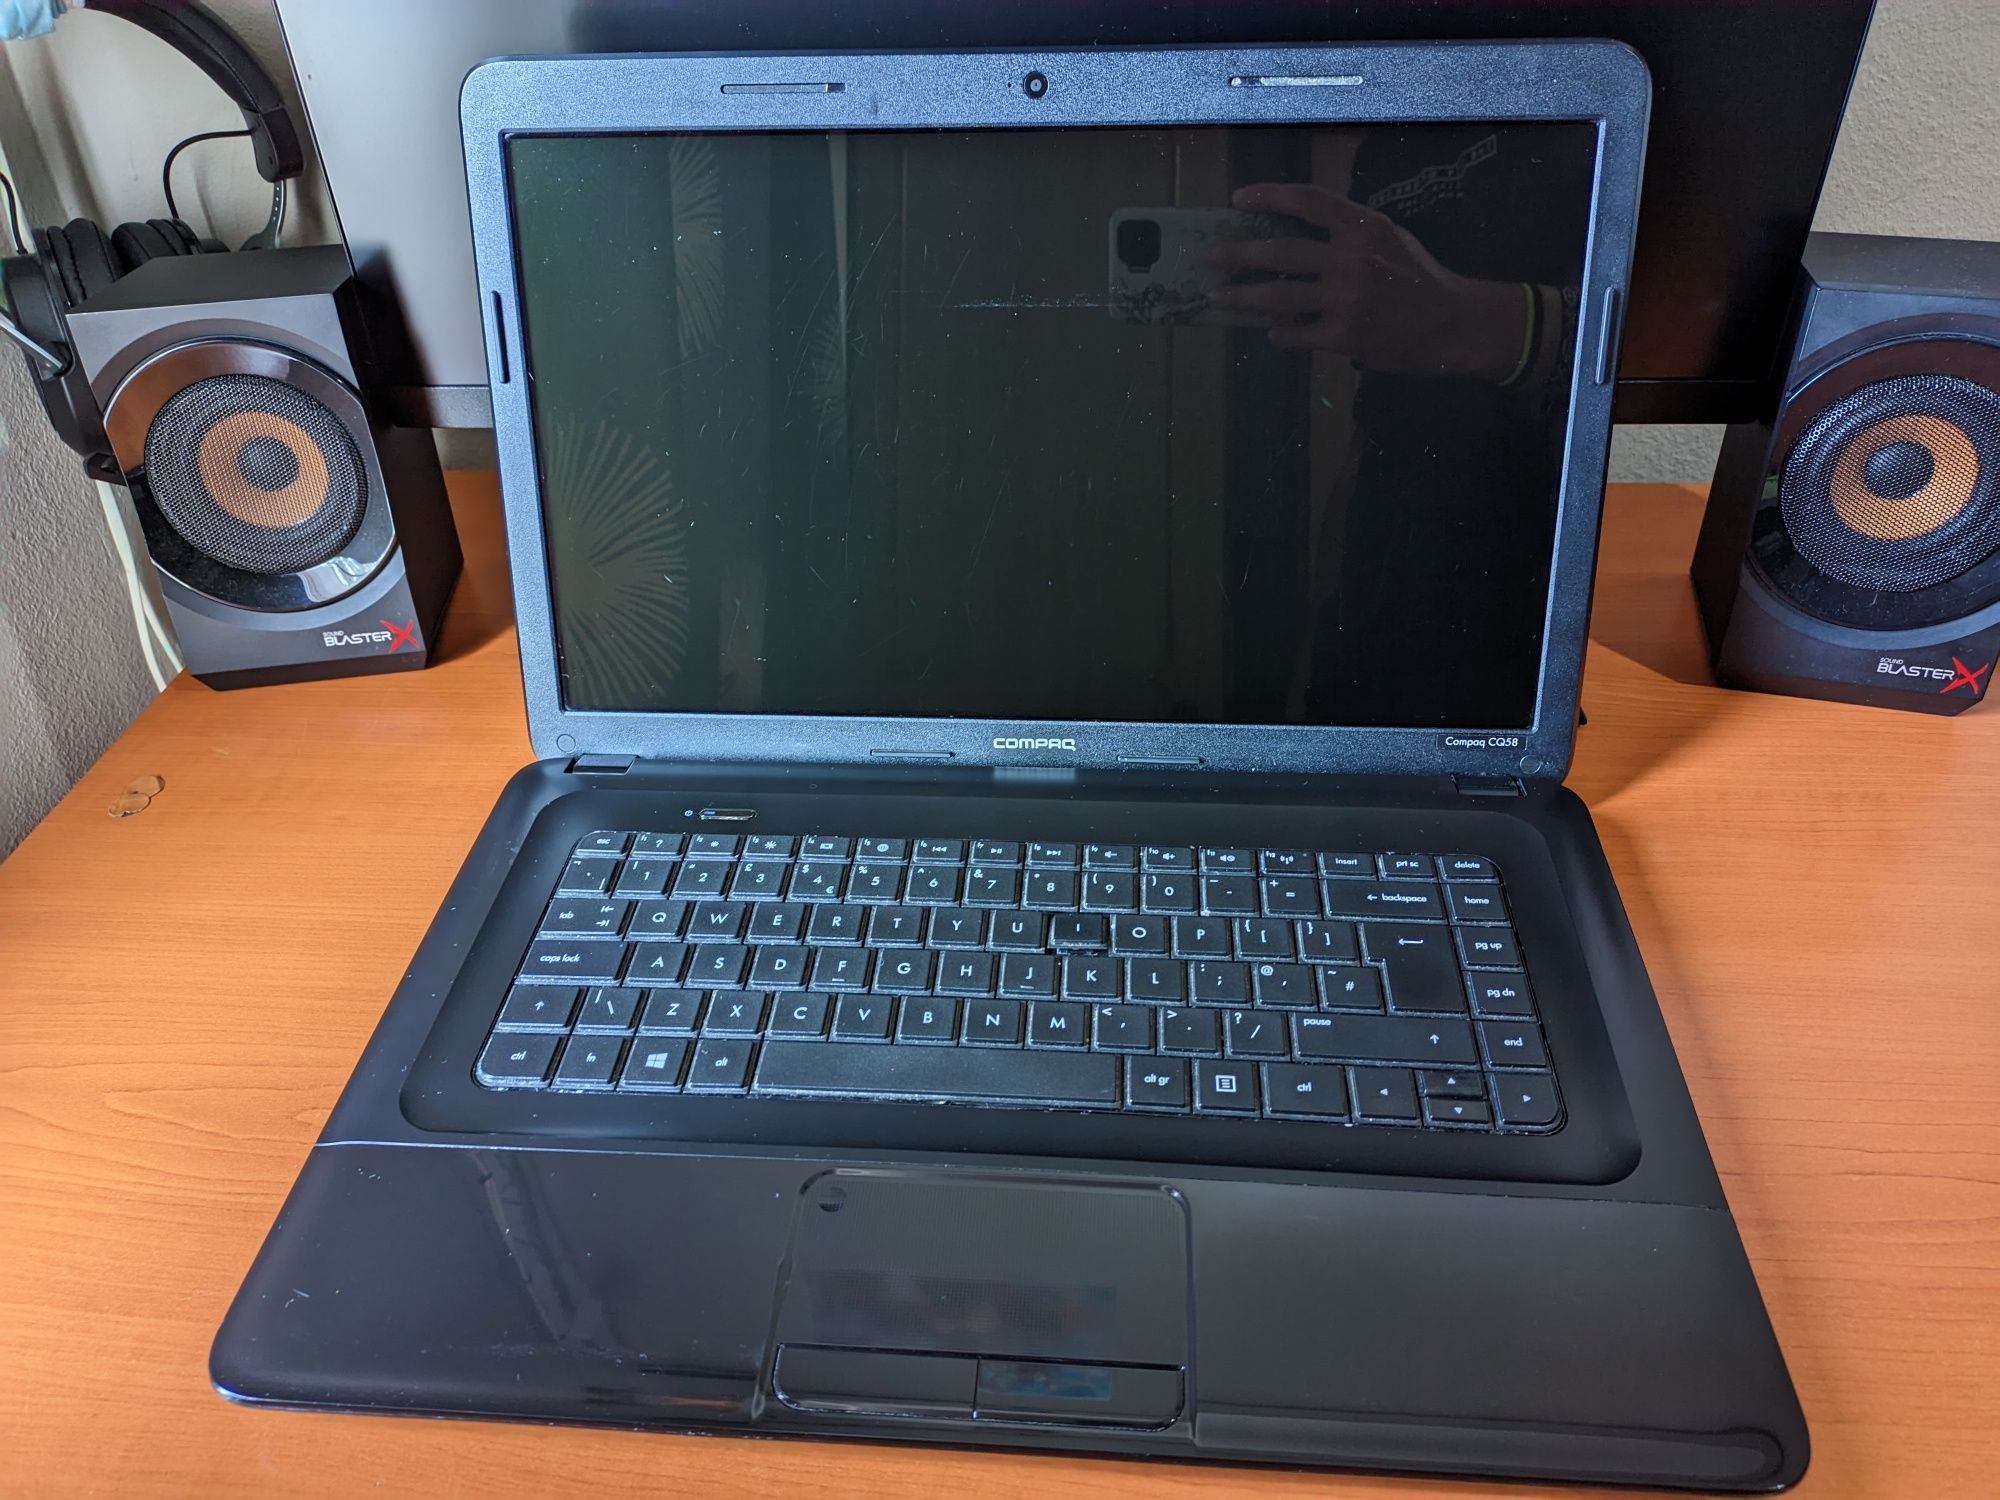 Laptop HP Compaq CQ58